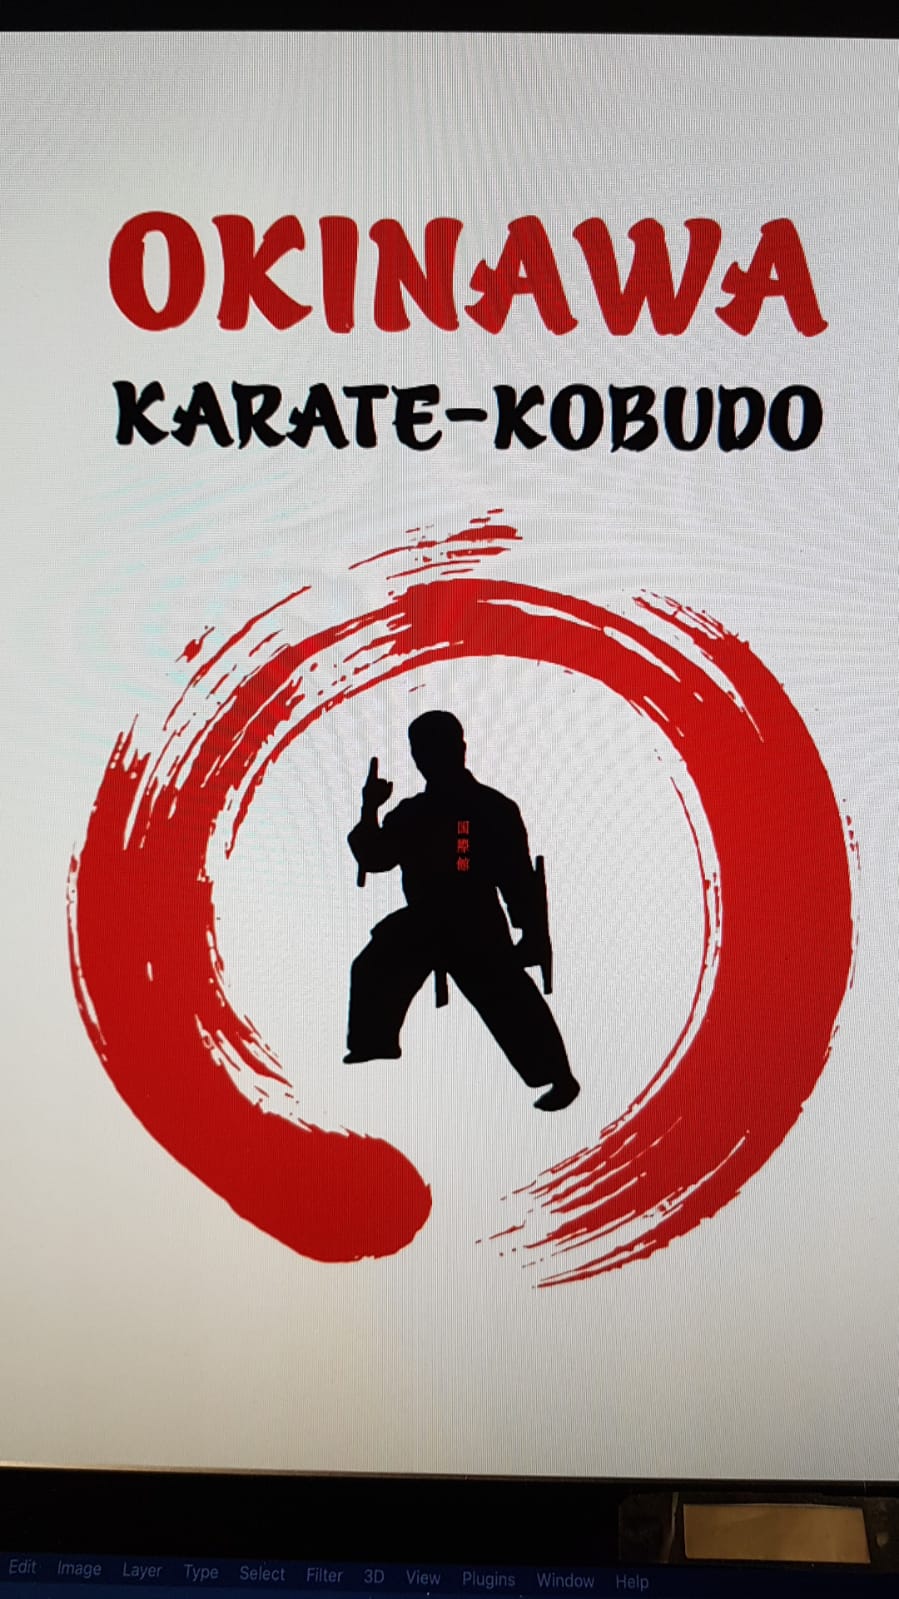 ShorinRyu Kempo Karate-do and Kobudo/ Family Karate For Christ | 432 Co Rd 466, Lady Lake, FL 32159, USA | Phone: (352) 653-8831